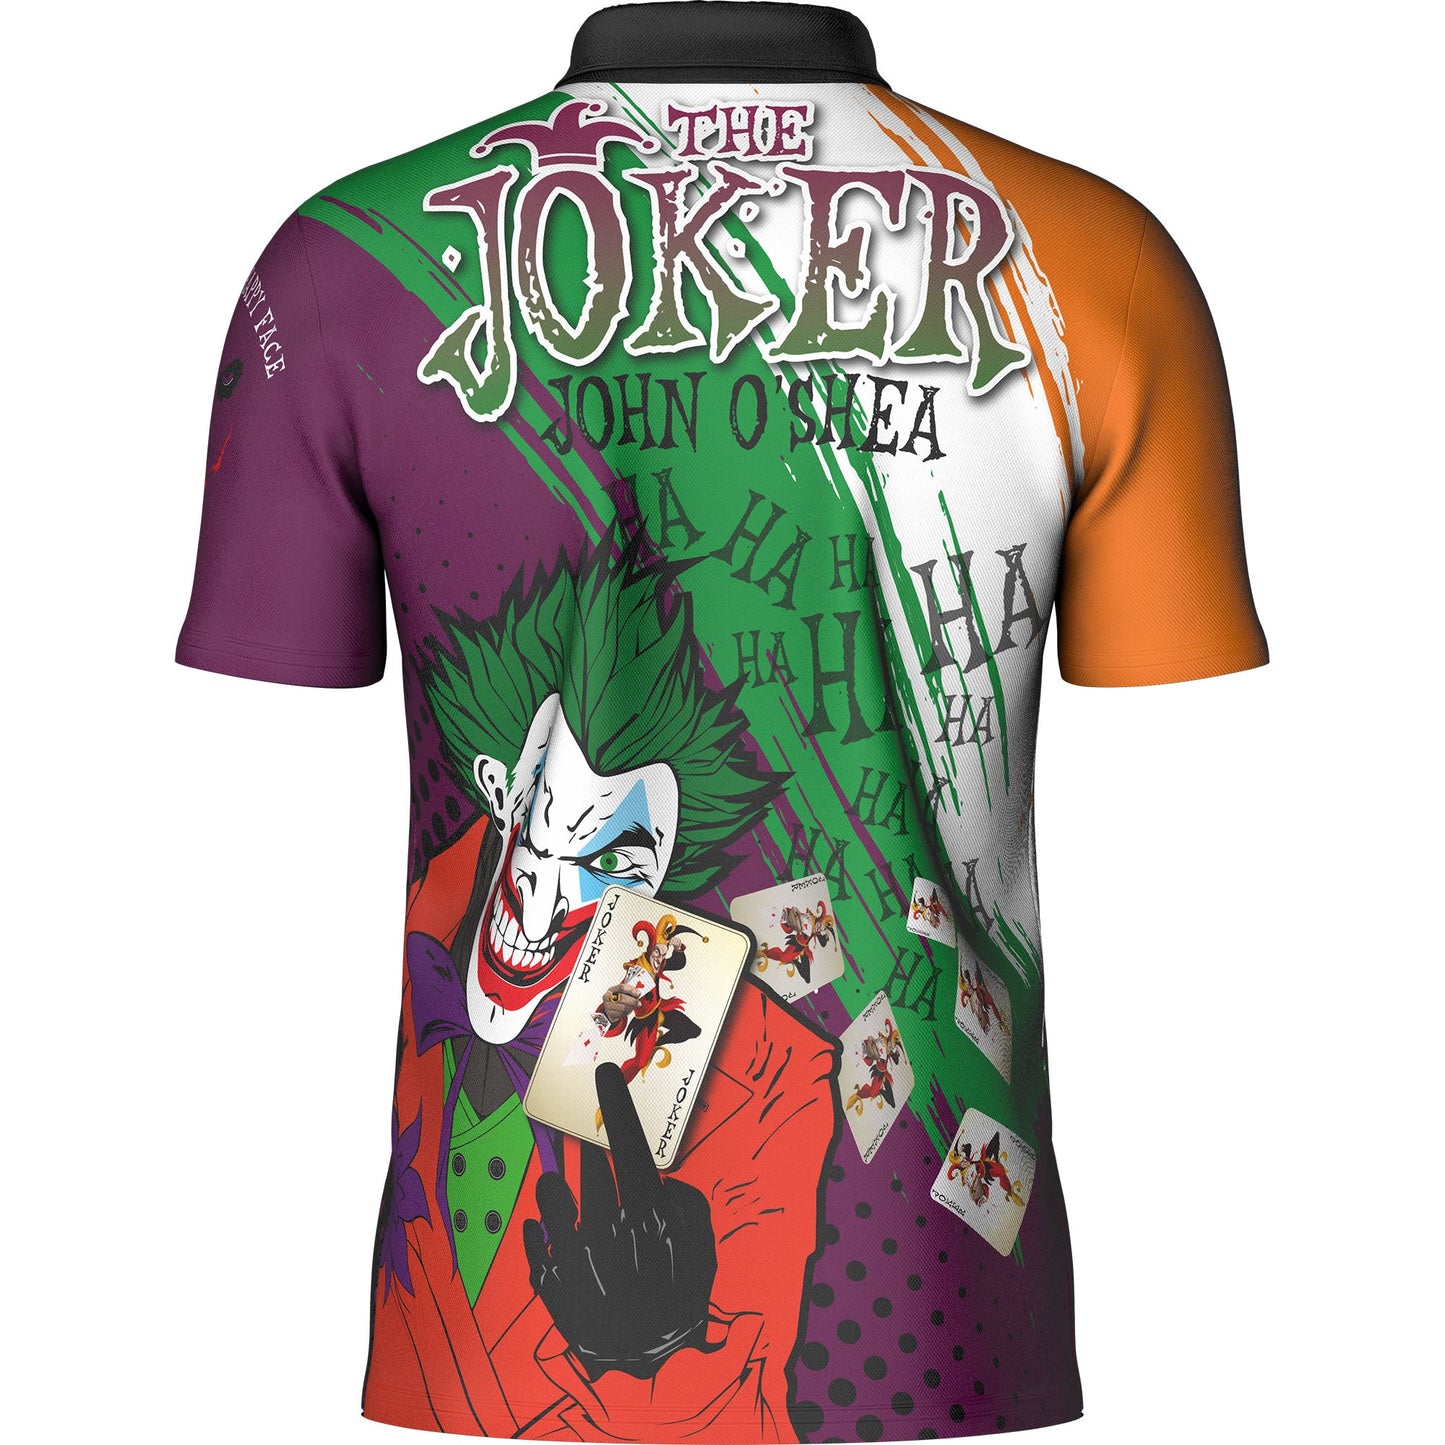 Mission Player Dart Shirt - John O'Shea - The Joker